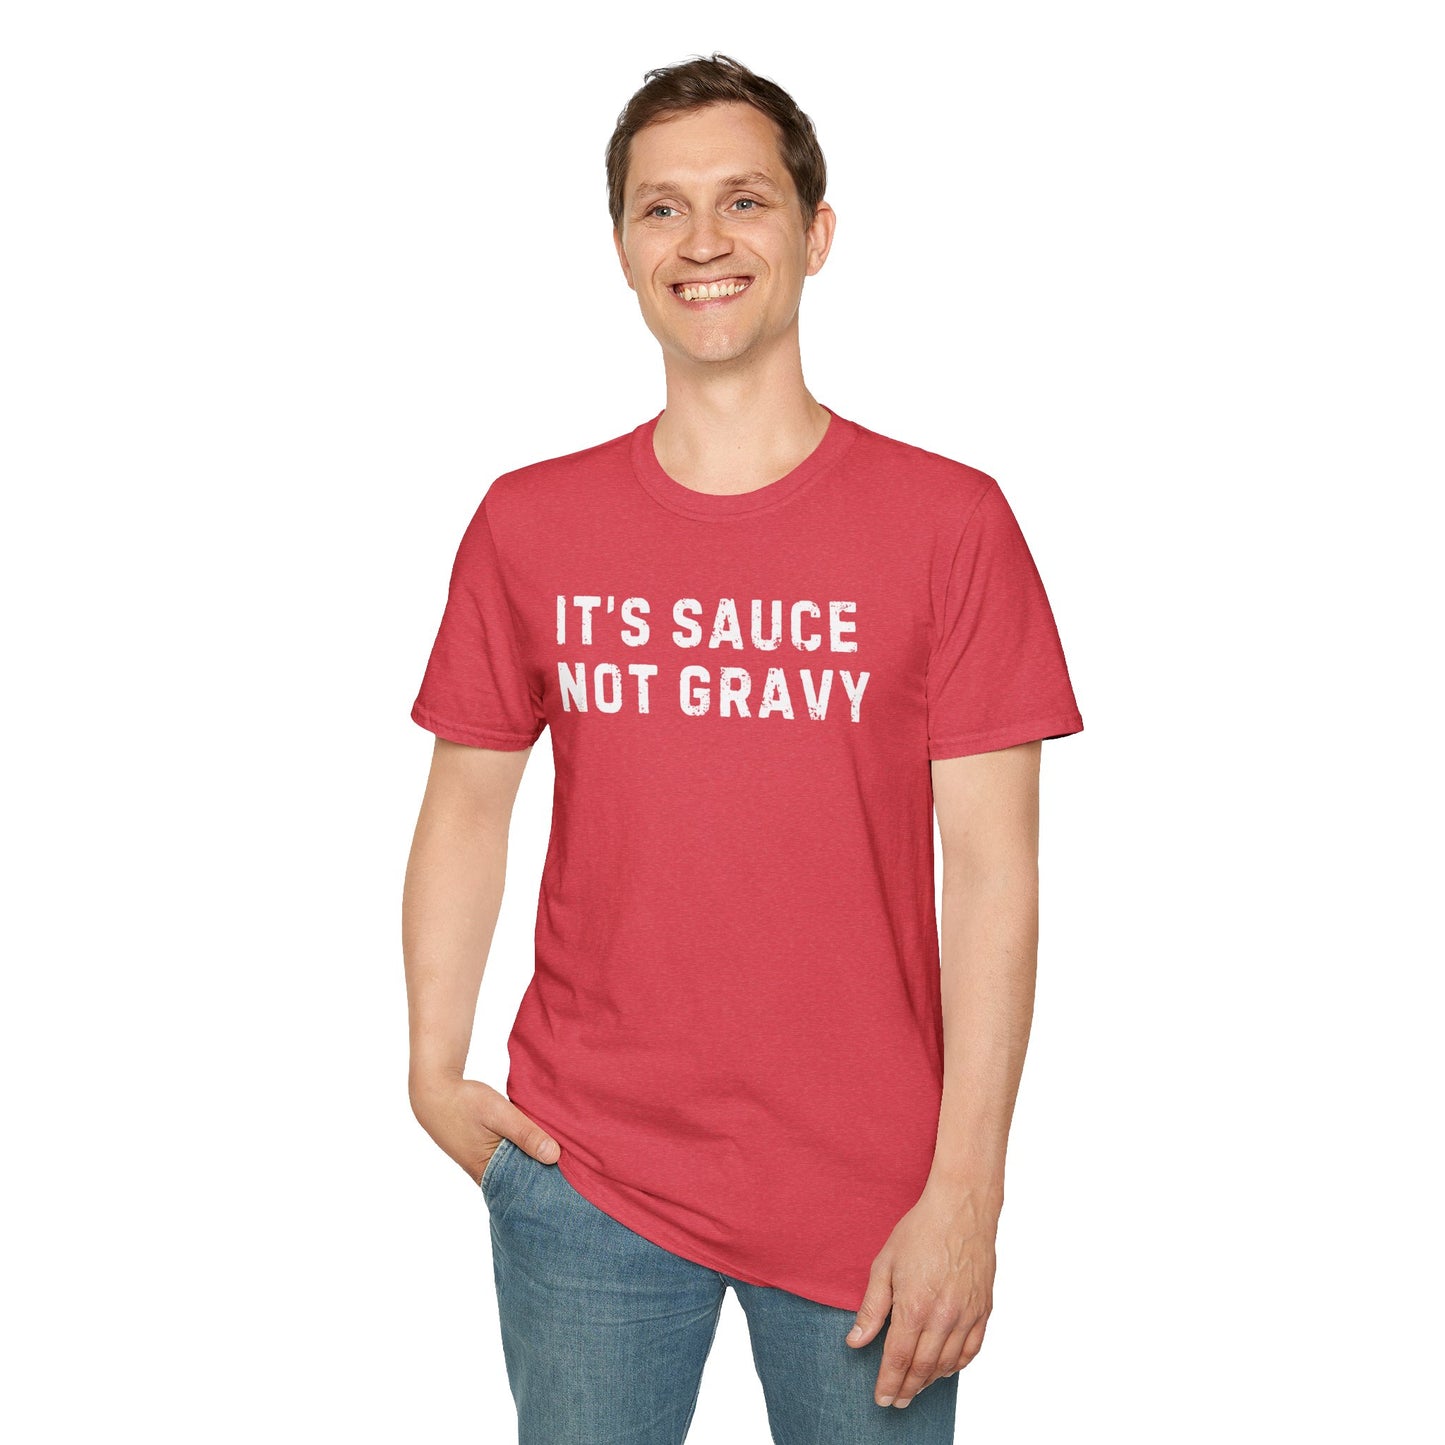 It's Sauce Not Gravy T-Shirt - Ultra-Soft Cotton Blend, Unisex Classic Fit for Italian Pride